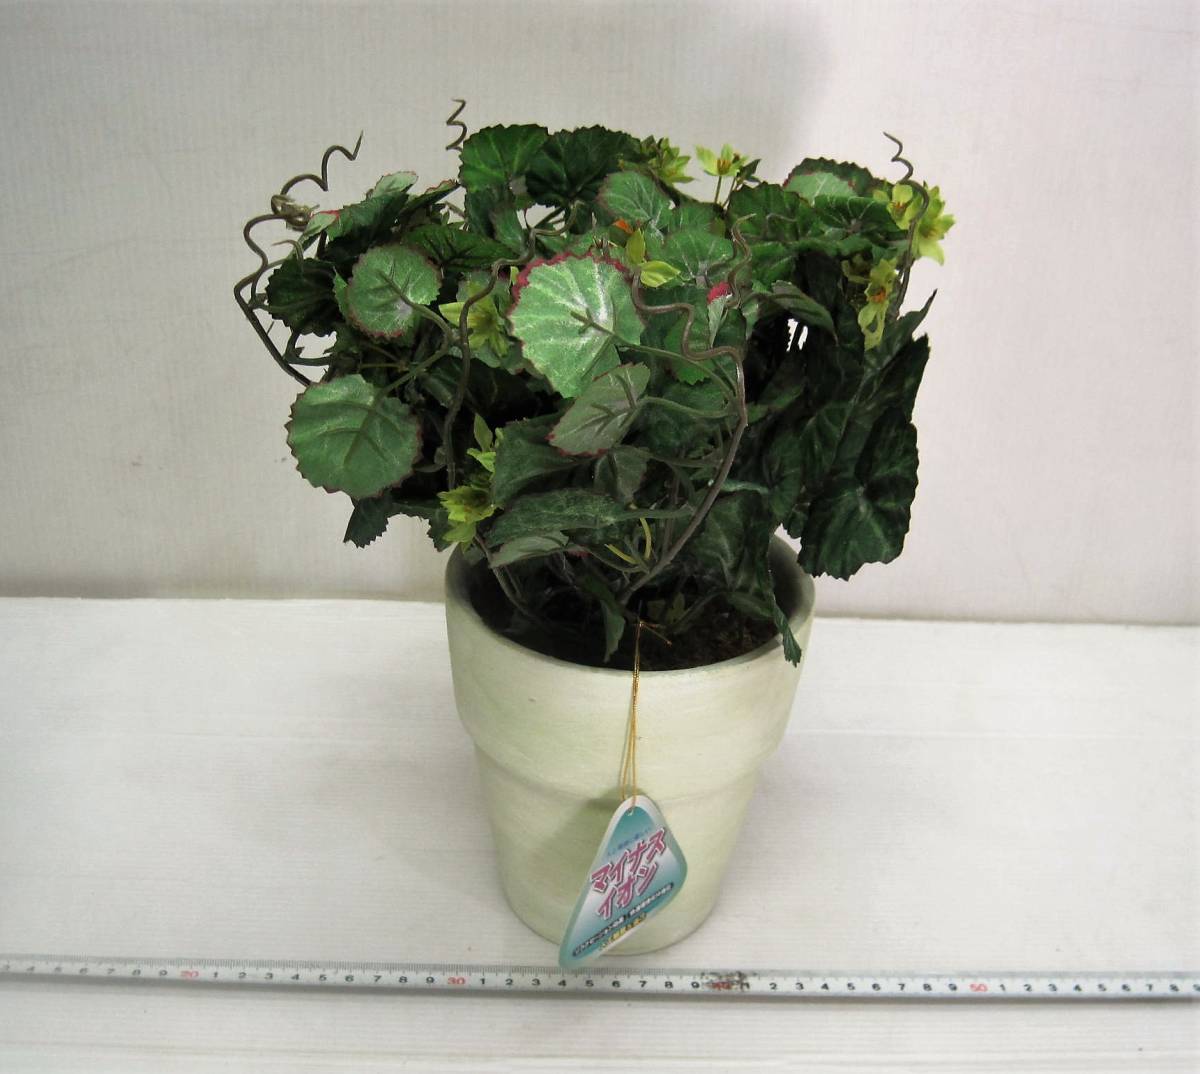 ! green arrange vase attaching,2 piece .,, silk arrangement * artificial flower * image reference *